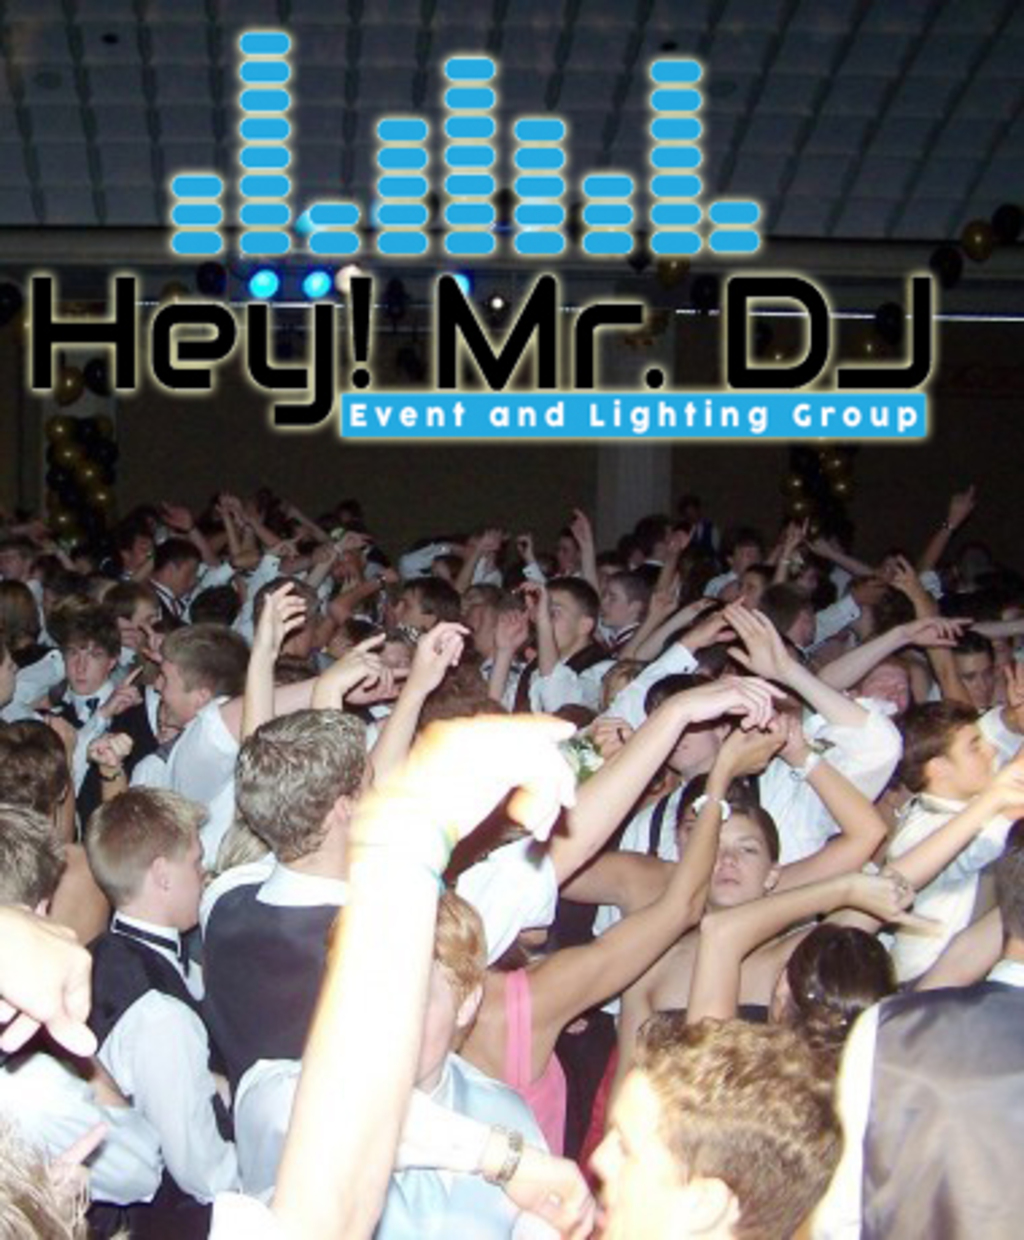 Hey! Mr. DJ, Event and Lighting Group